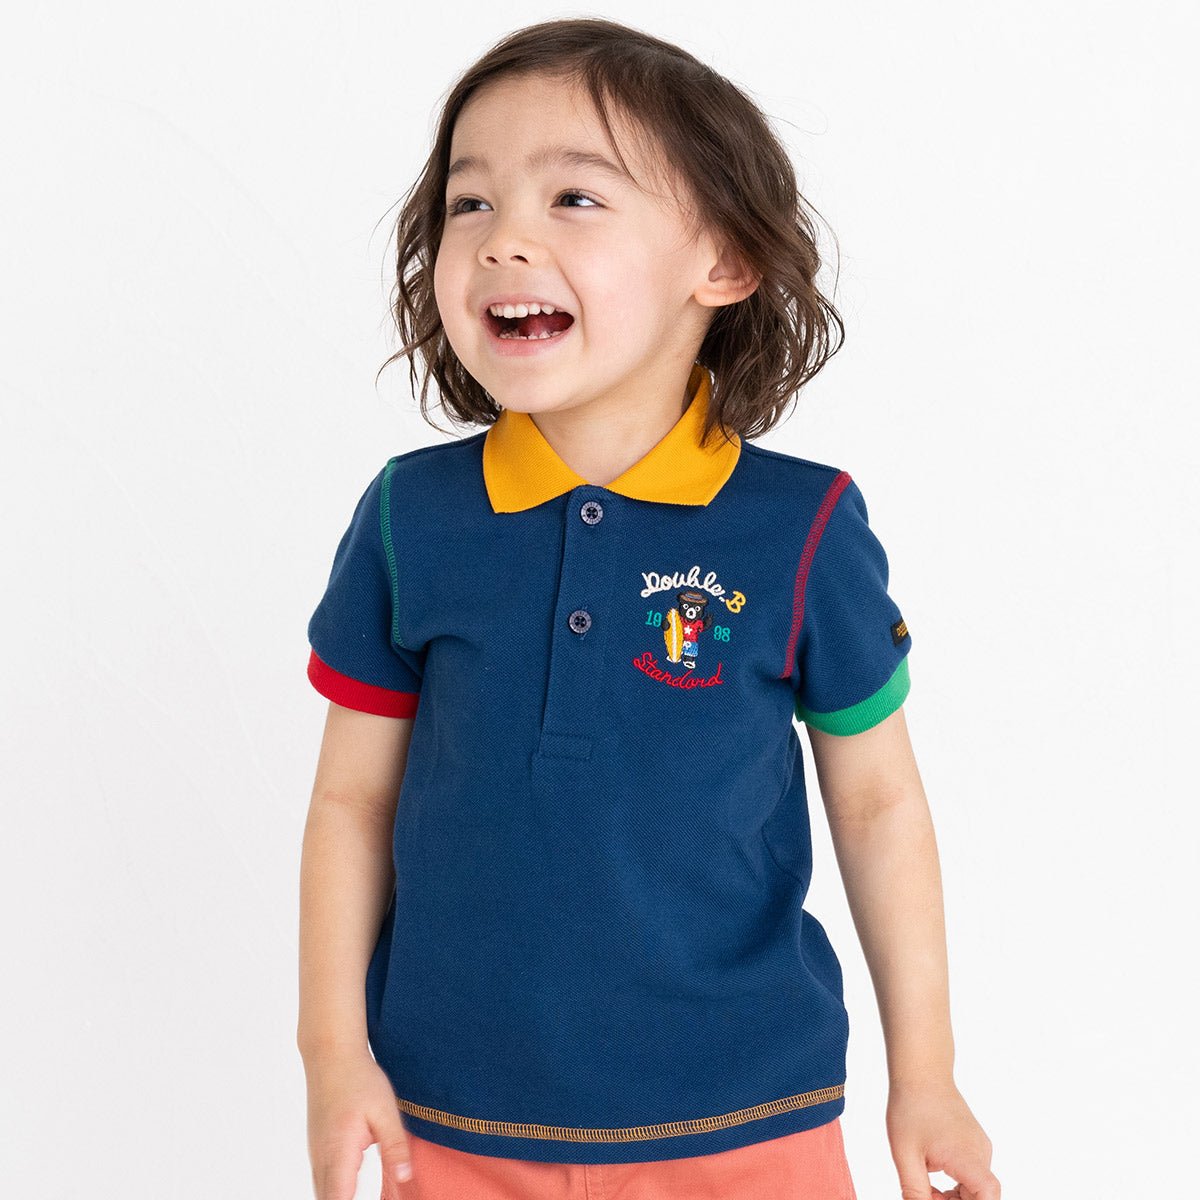 DOUBLE_B Short Sleeve Polo Shirt-Navy - 60-5506-576-87-80